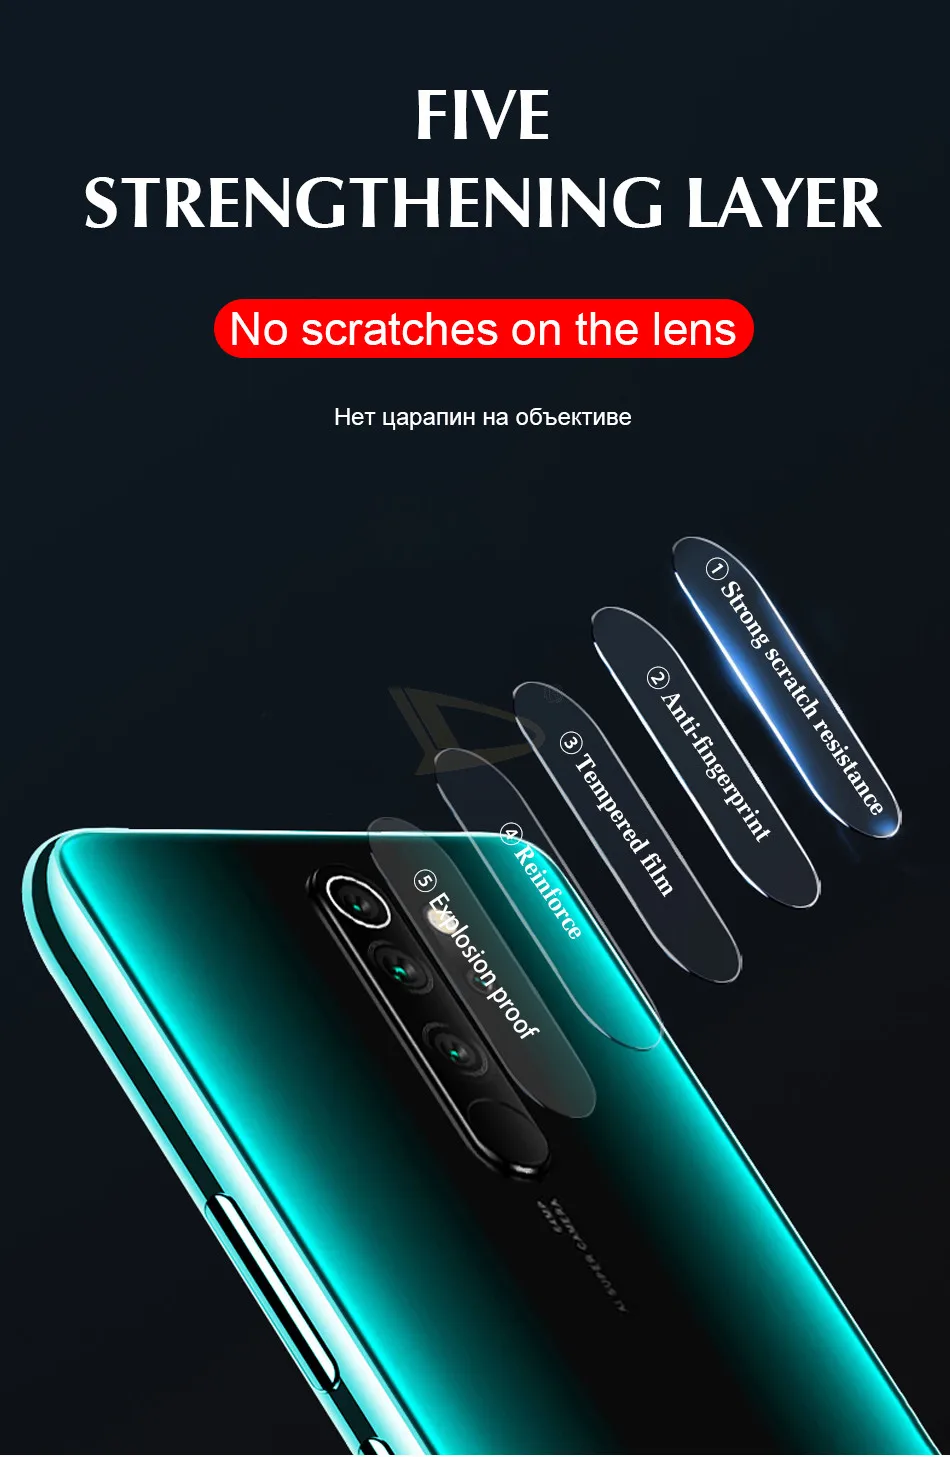 2-4-6 шт. Защитное стекло для камеры Xiaomi Redmi Note 8 7 Pro K20 закаленное стекло для Redmi 8A 7A 8 Защитная пленка для объектива